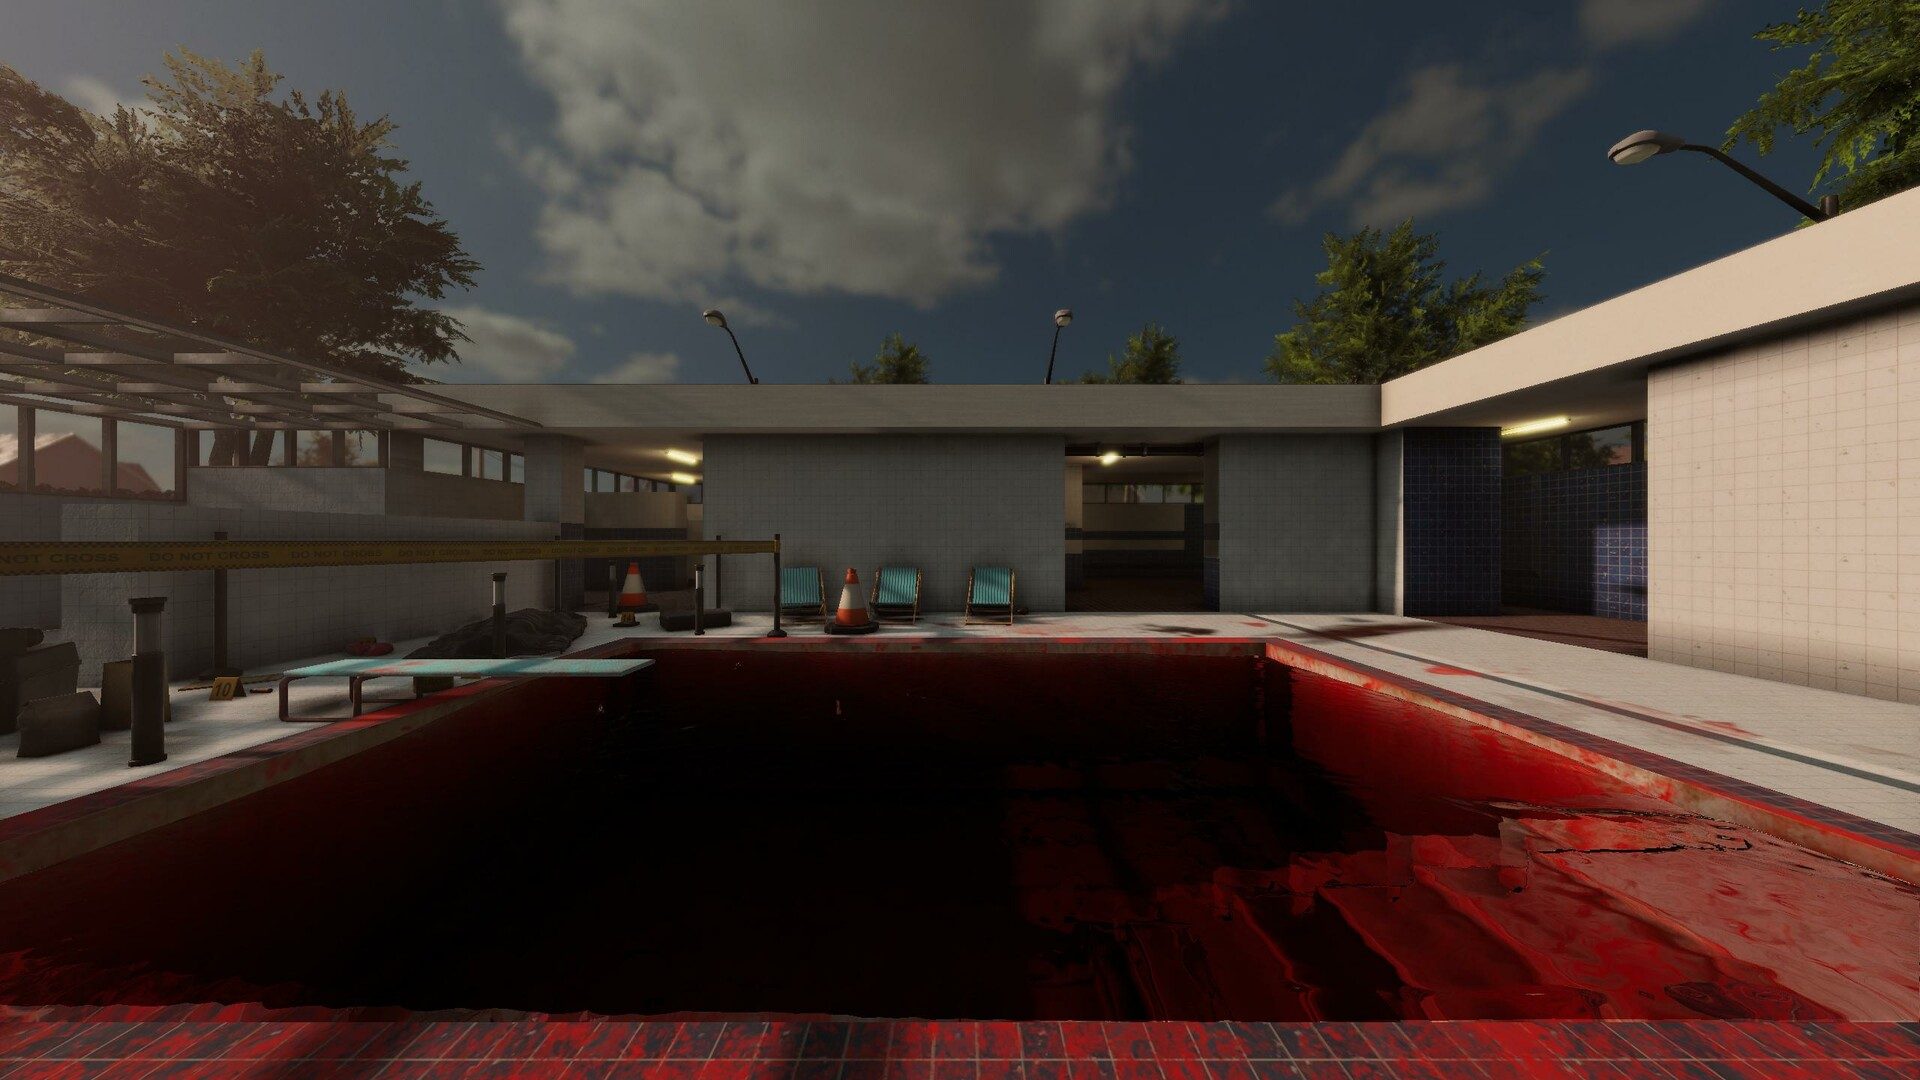 Pool Cleaning Simulator - скриншот игры 6